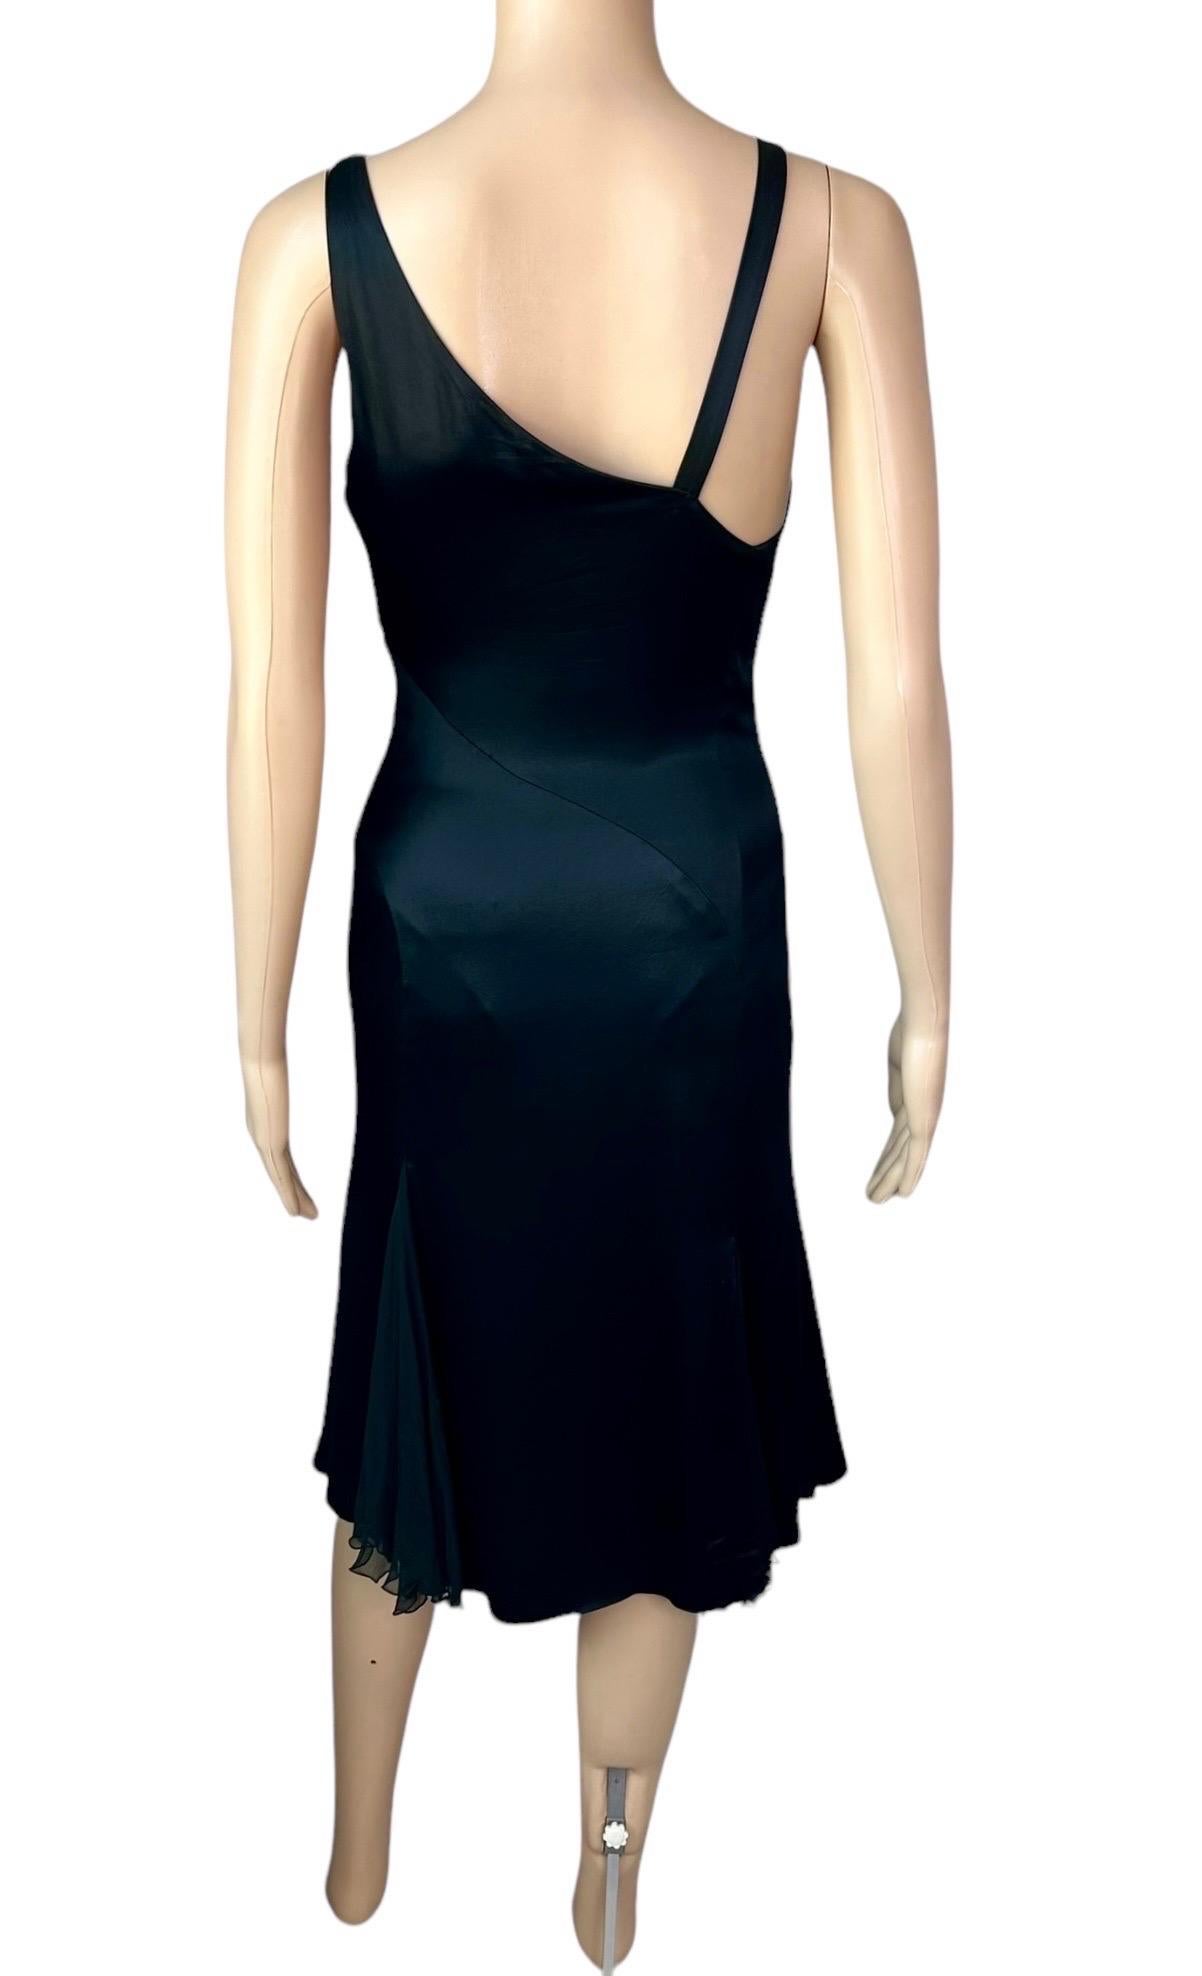 Versace F/W 2004 Embellished Buckle Studded Detail Plunging Black Evening Dress For Sale 4